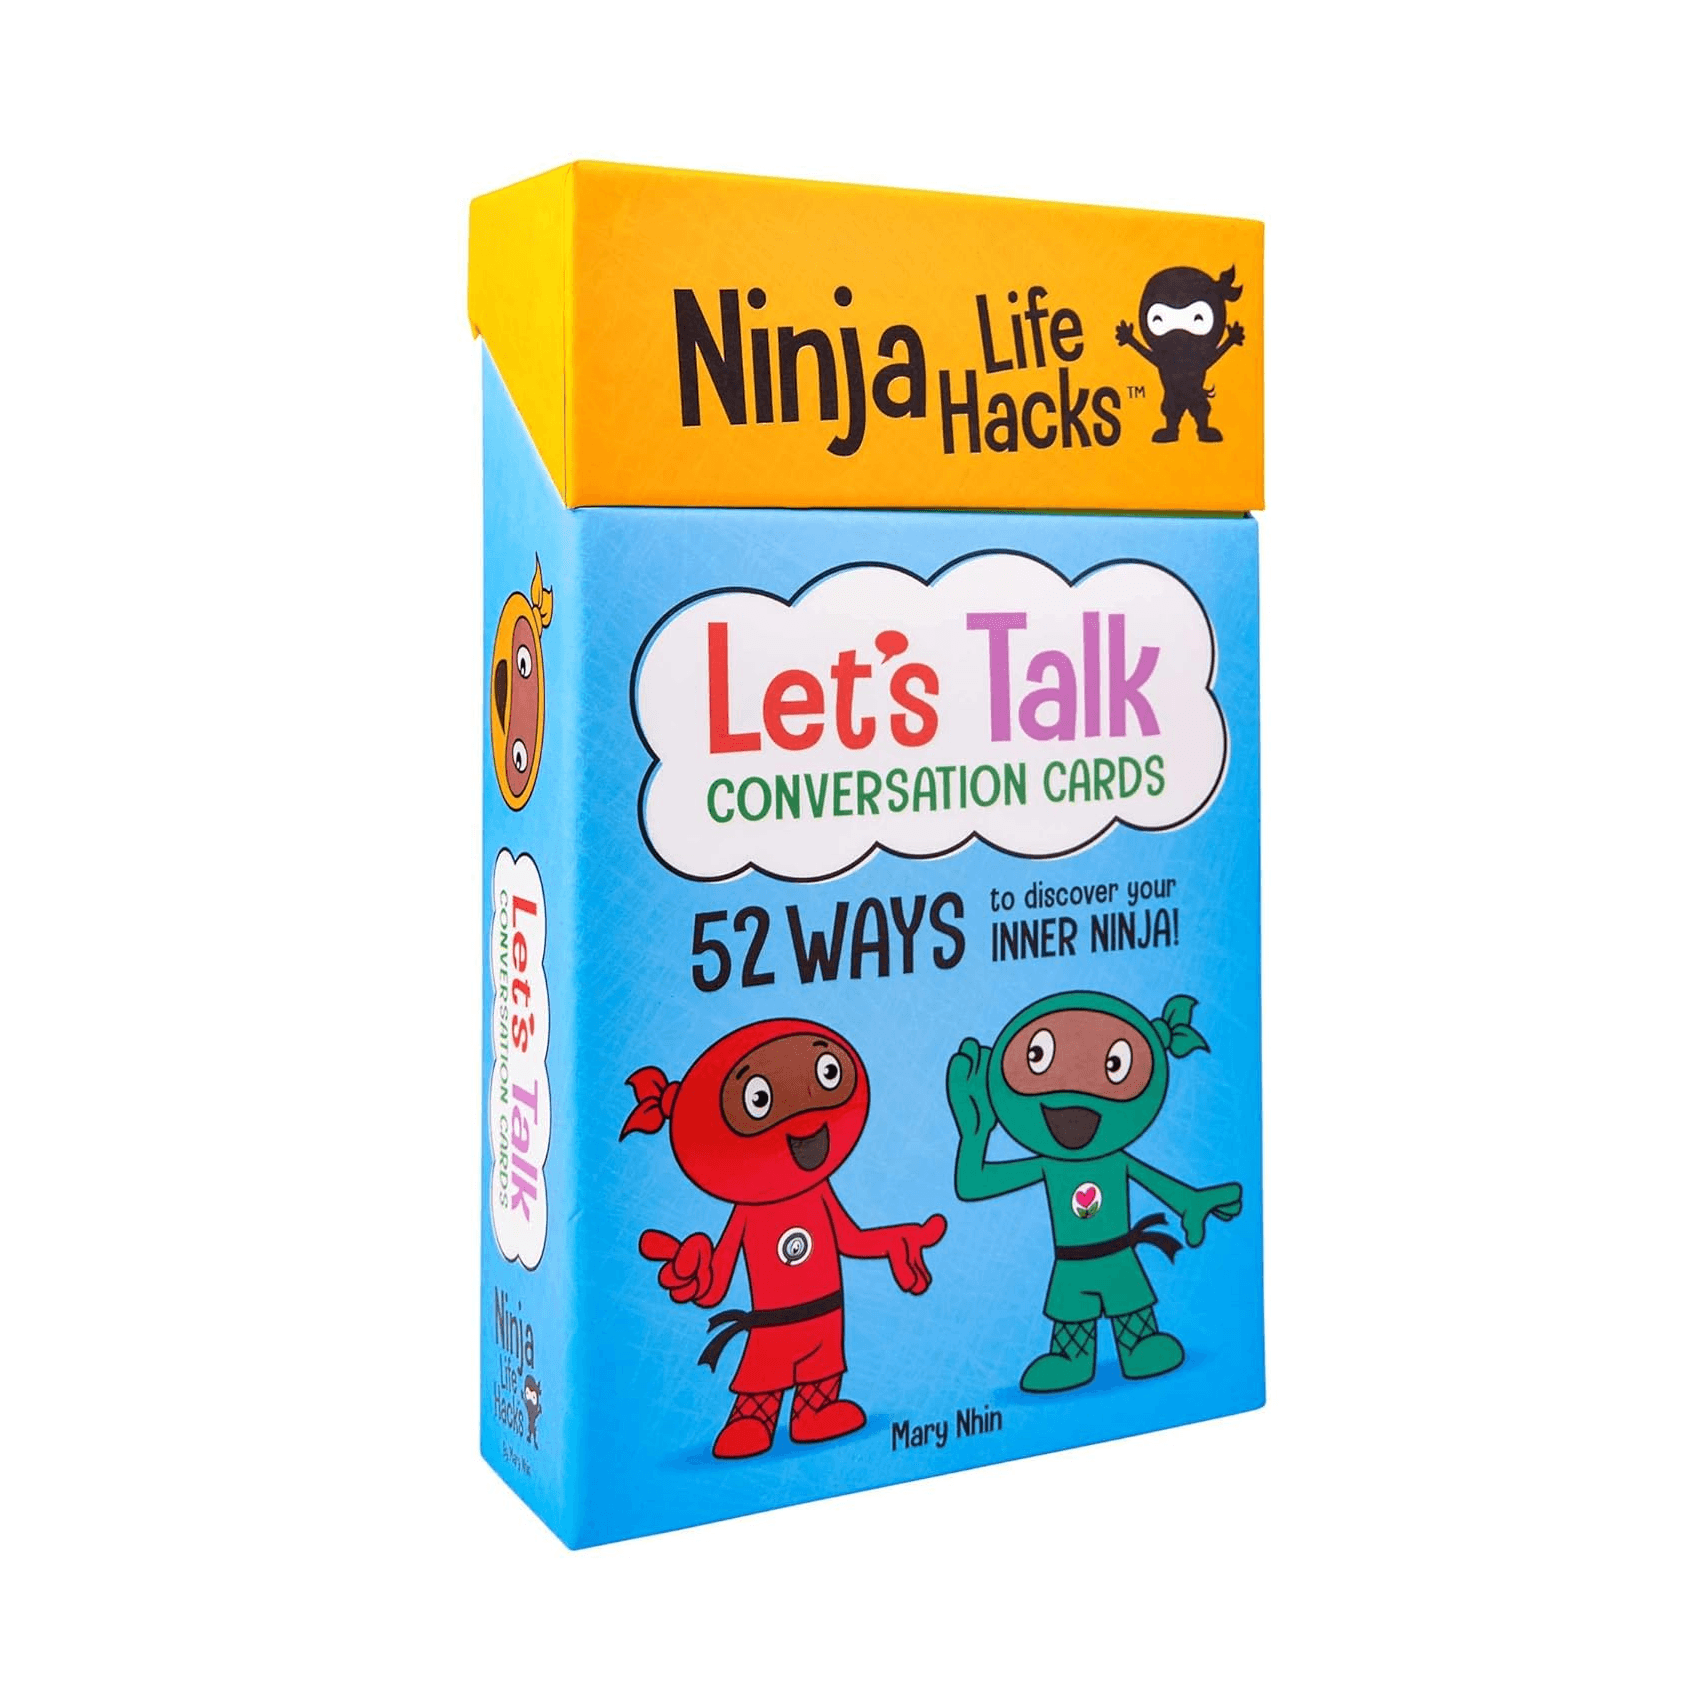 Montessori Mary Nhin Ninja Life Hacks: Let's Talk Conversation Cards